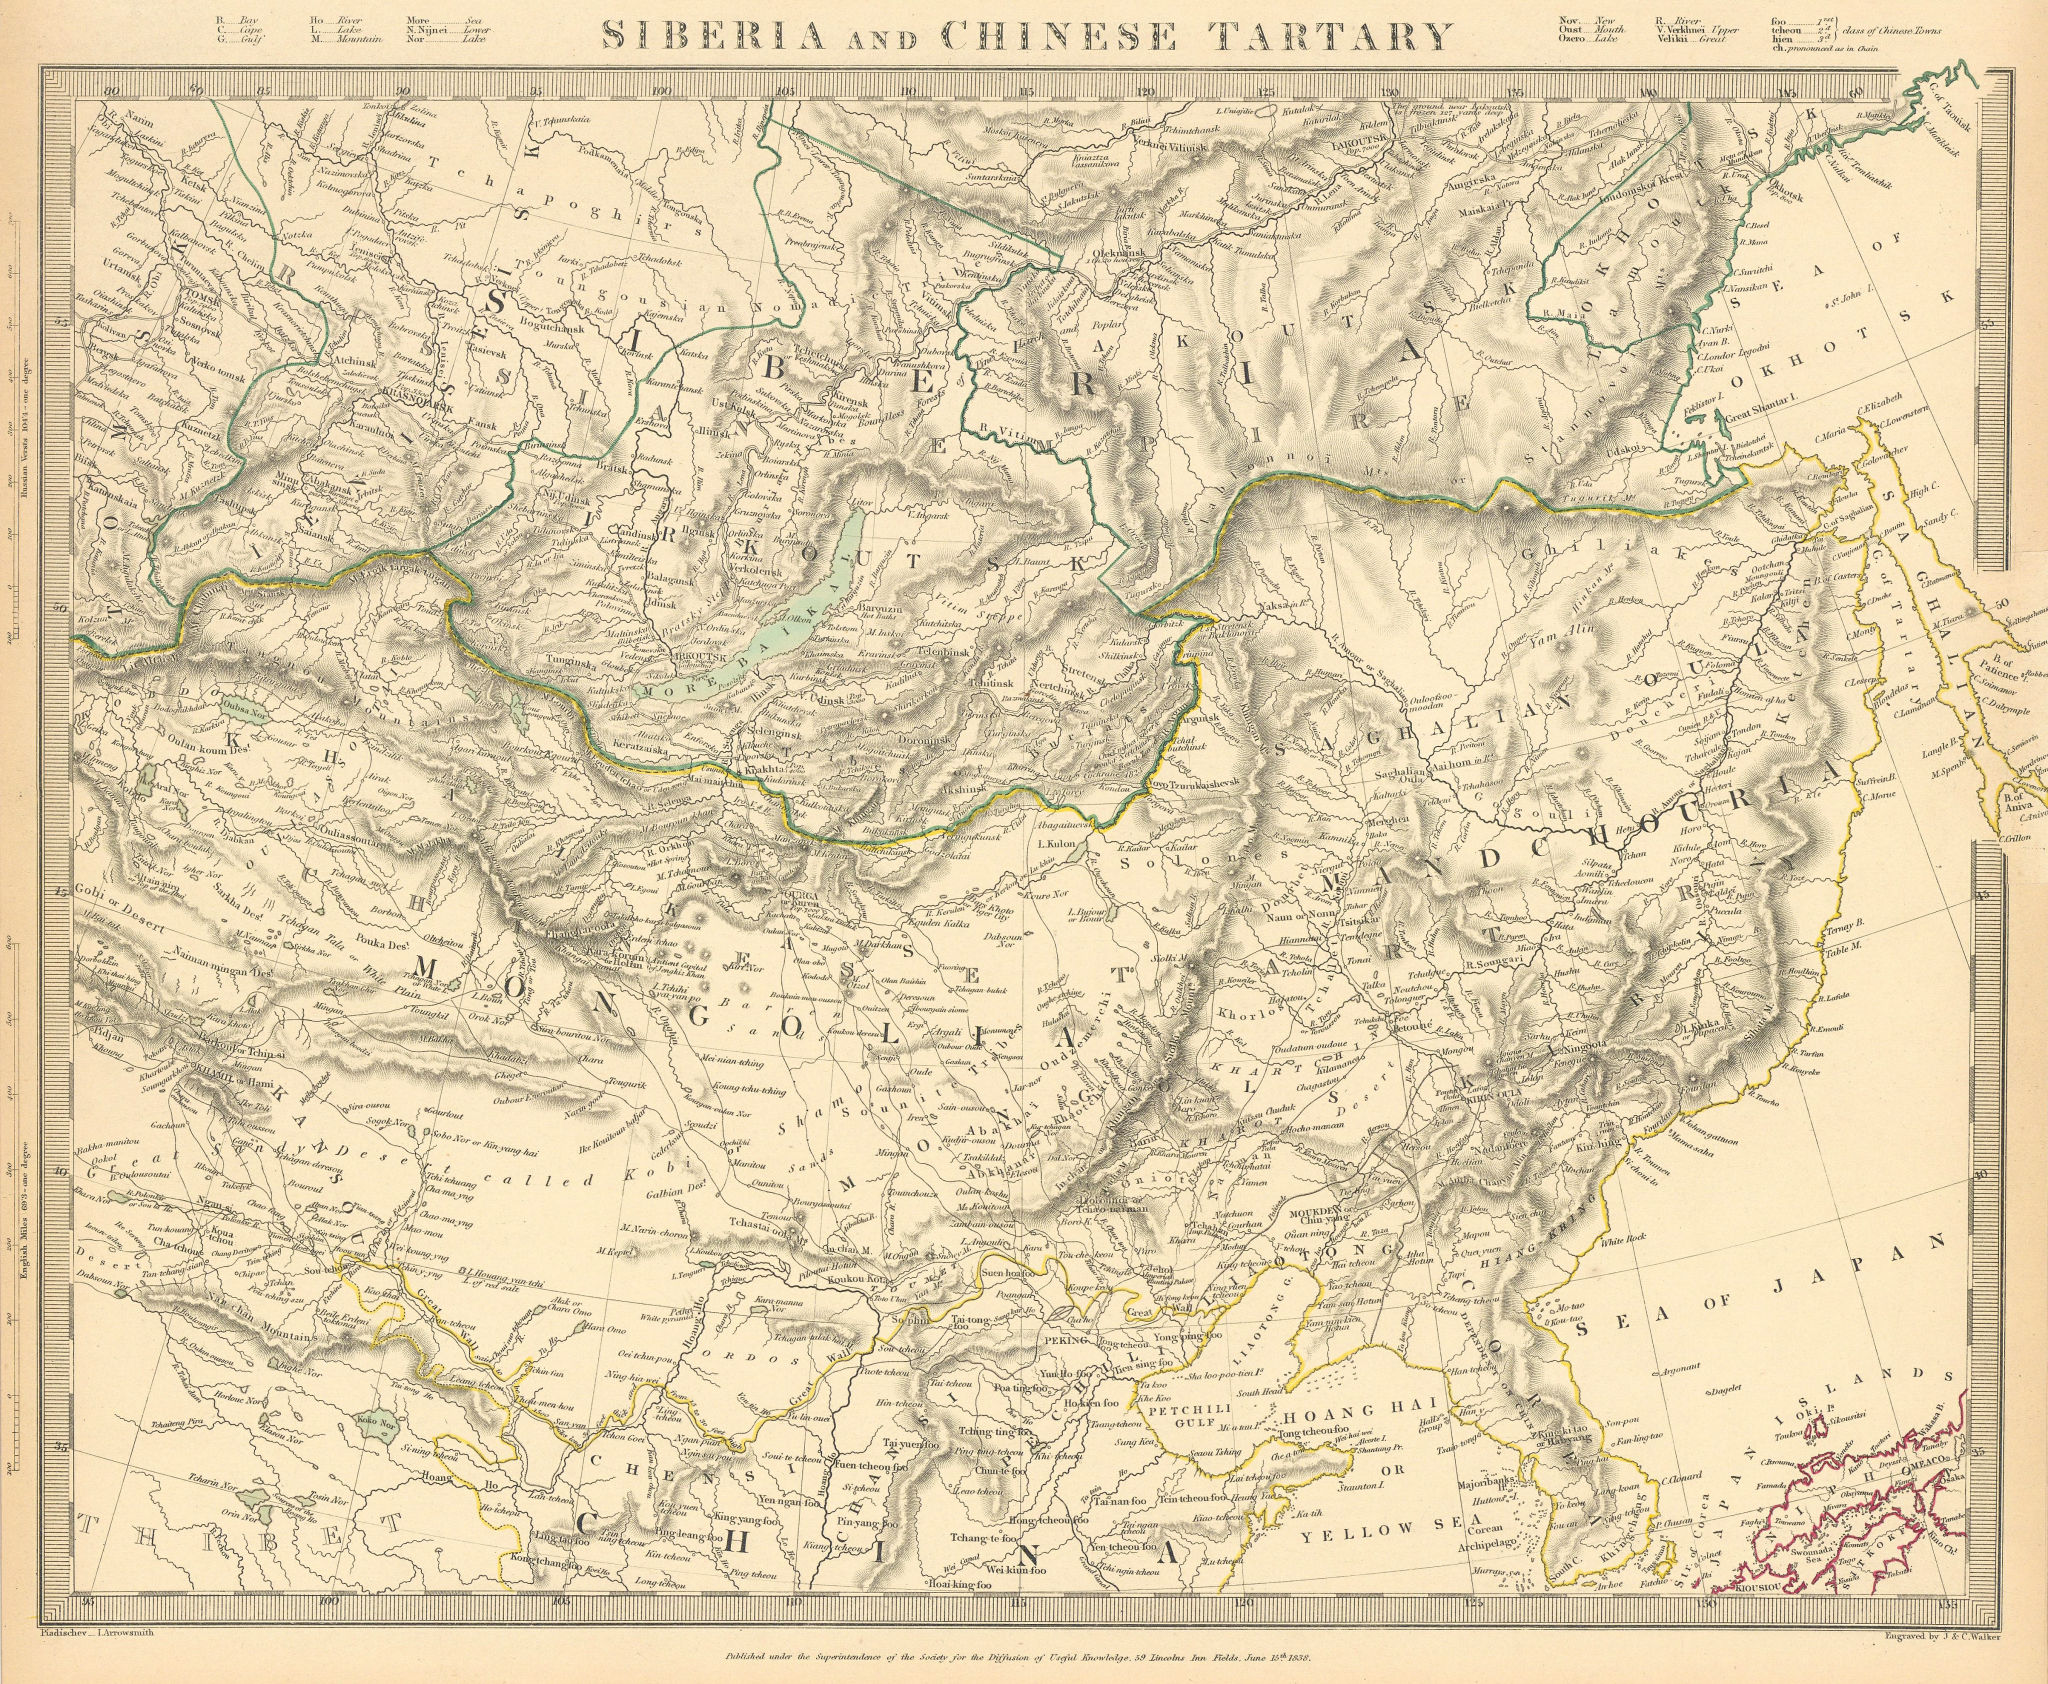 Associate Product SIBERIA AND CHINESE TARTARY. Manchuria Mongolia Korea China. SDUK 1844 old map